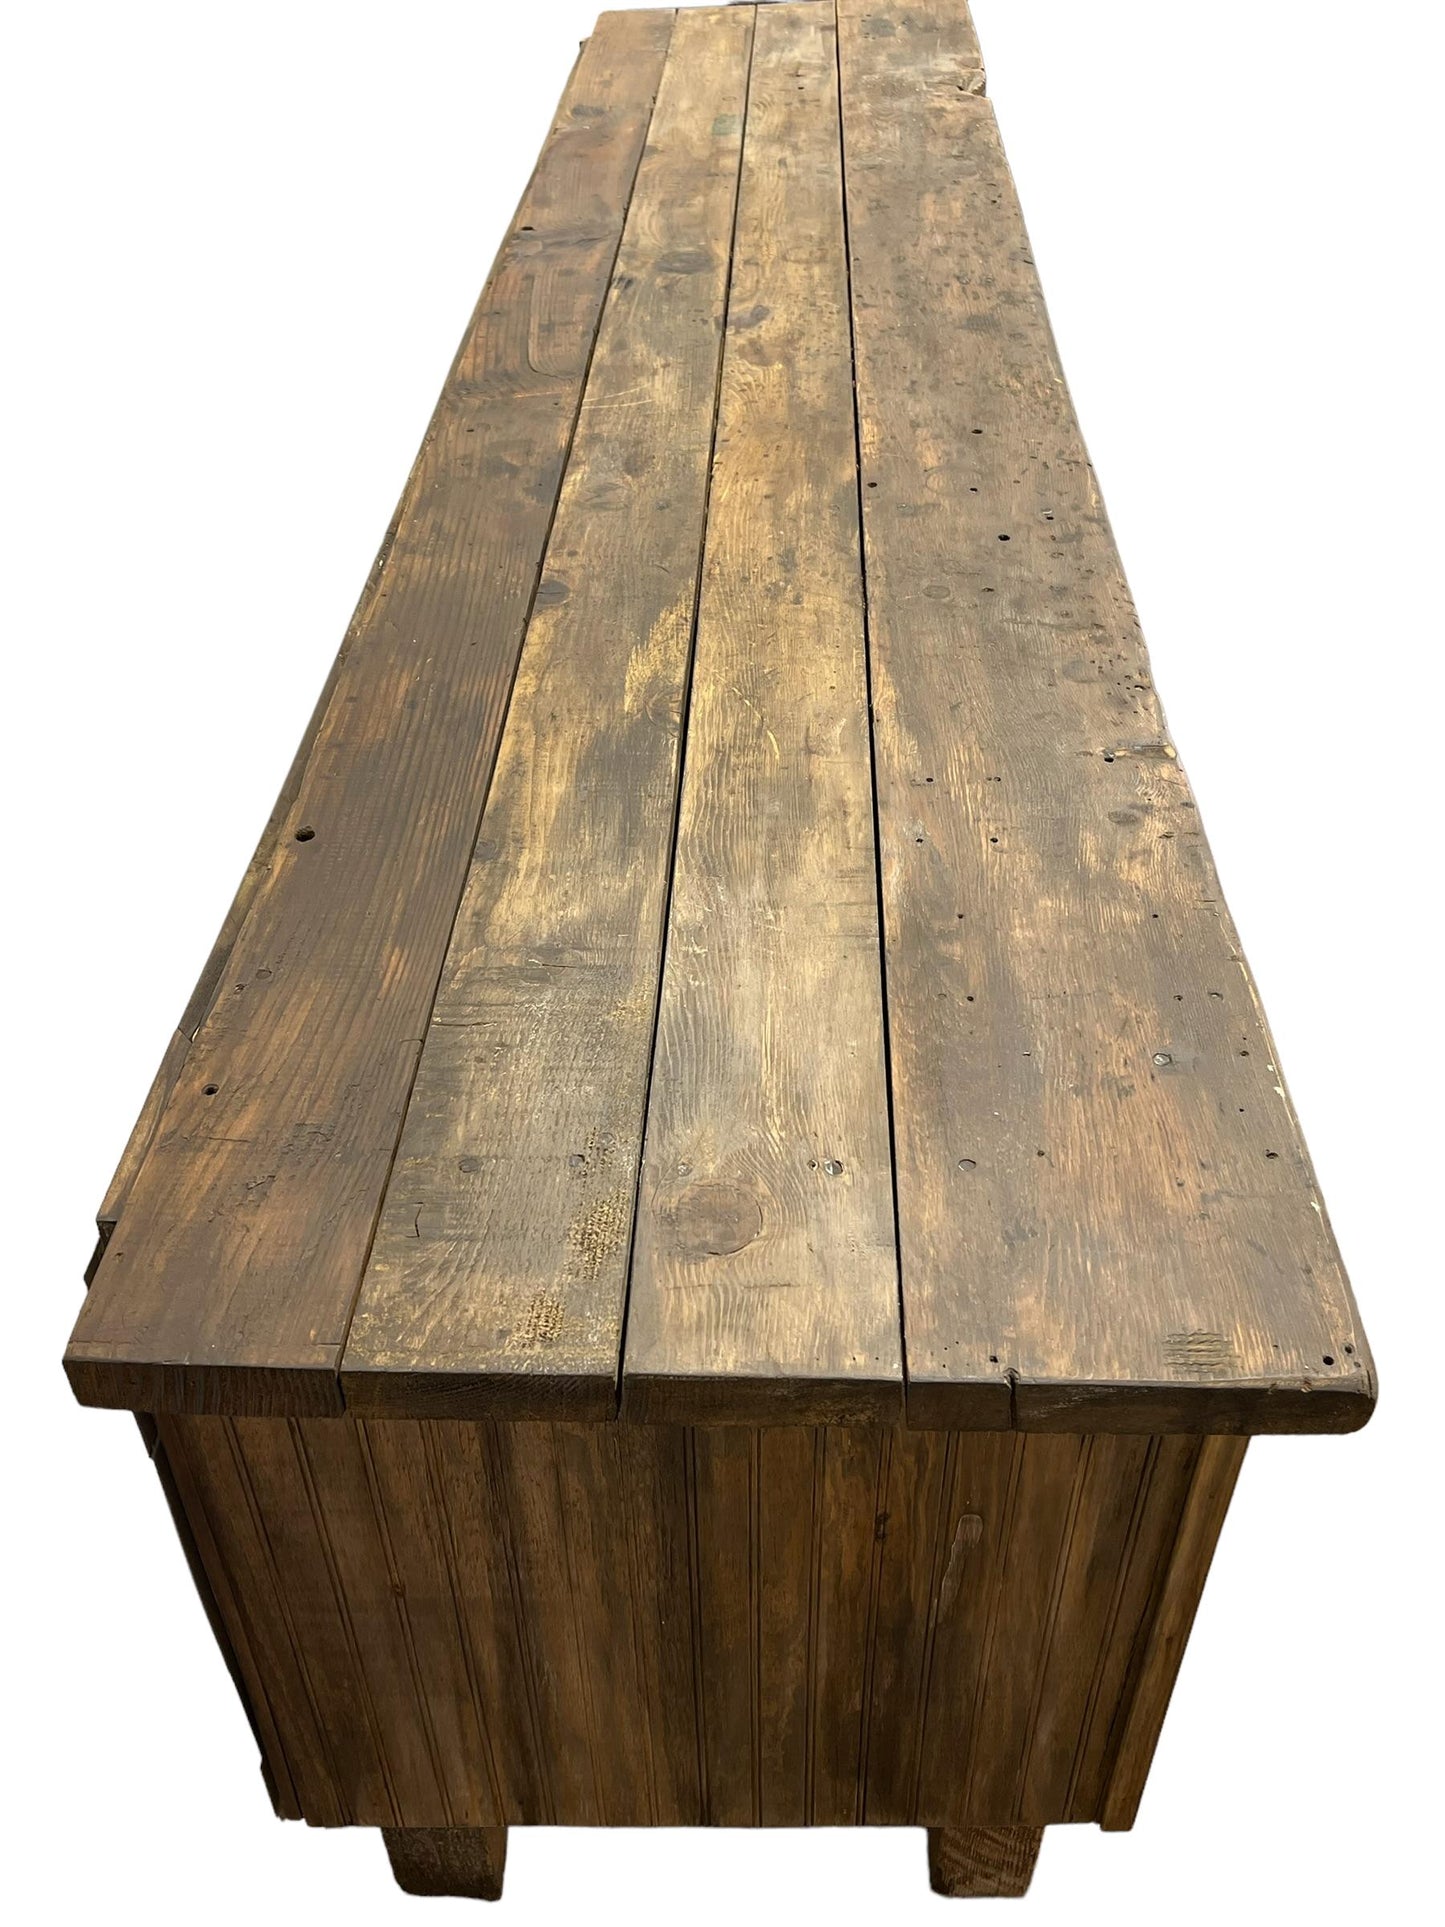 Industrial Wooden Antique Work Counter